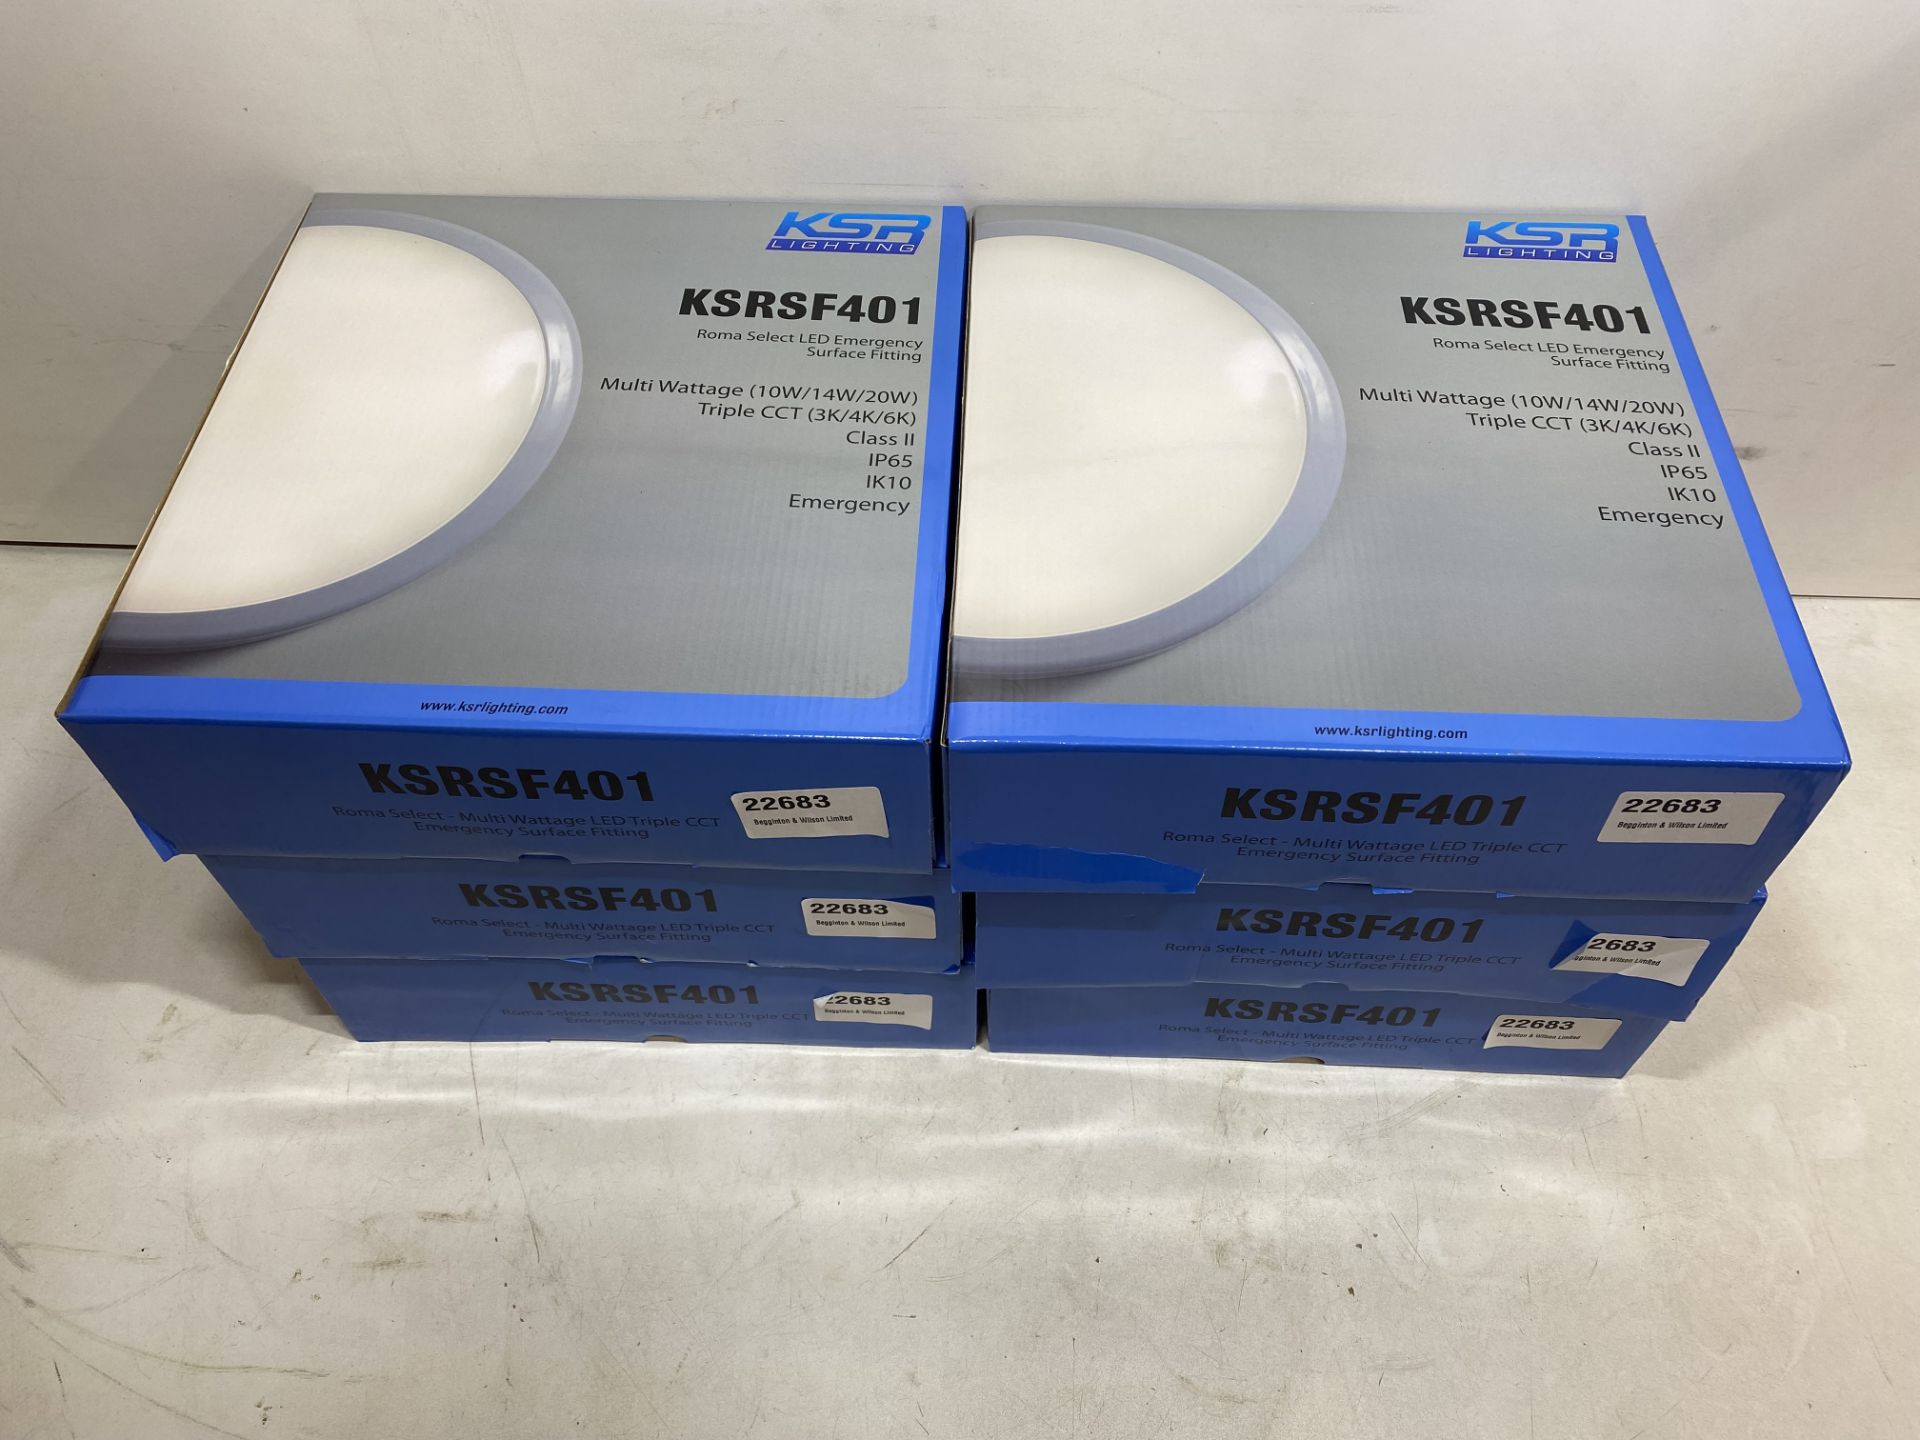 6 x KSR Lighting KSRSF401 Roma Select LED Emergency Surface Fitting Lights, White